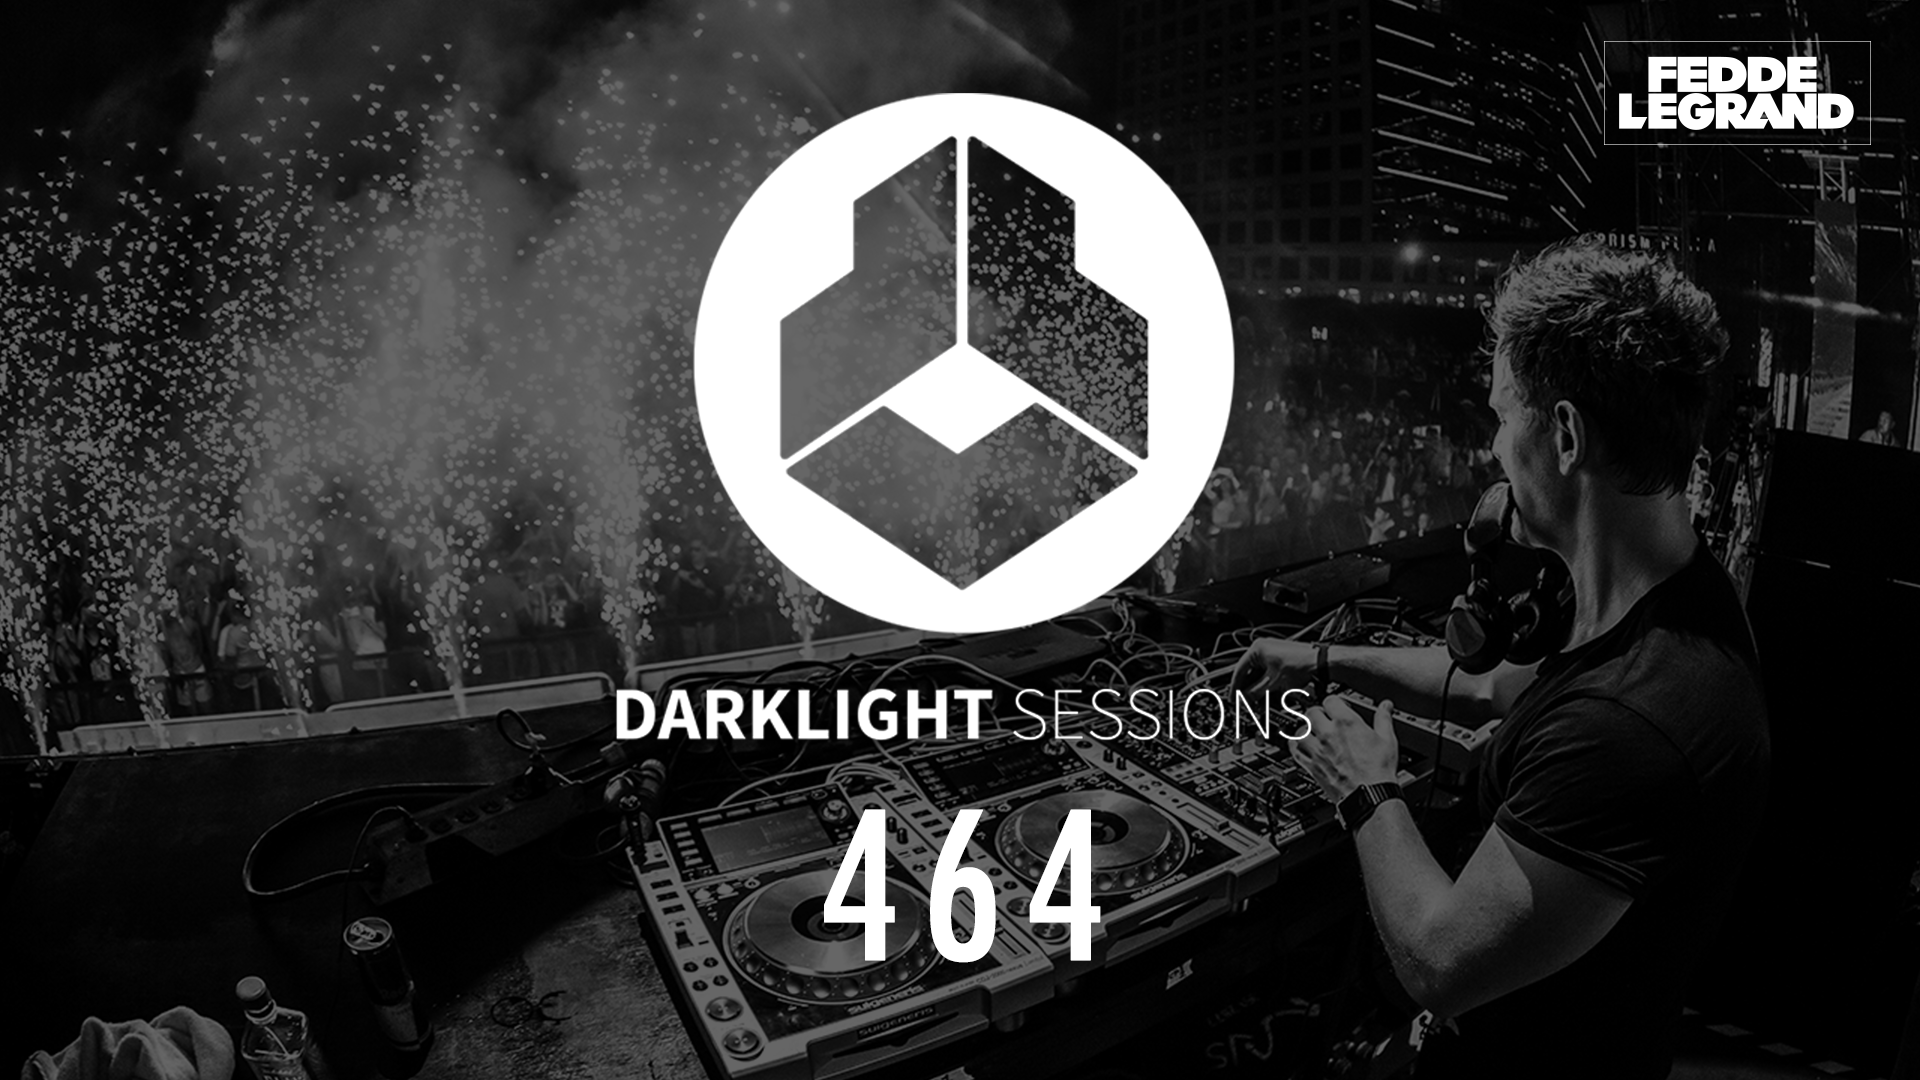 Darklight Sessions 464